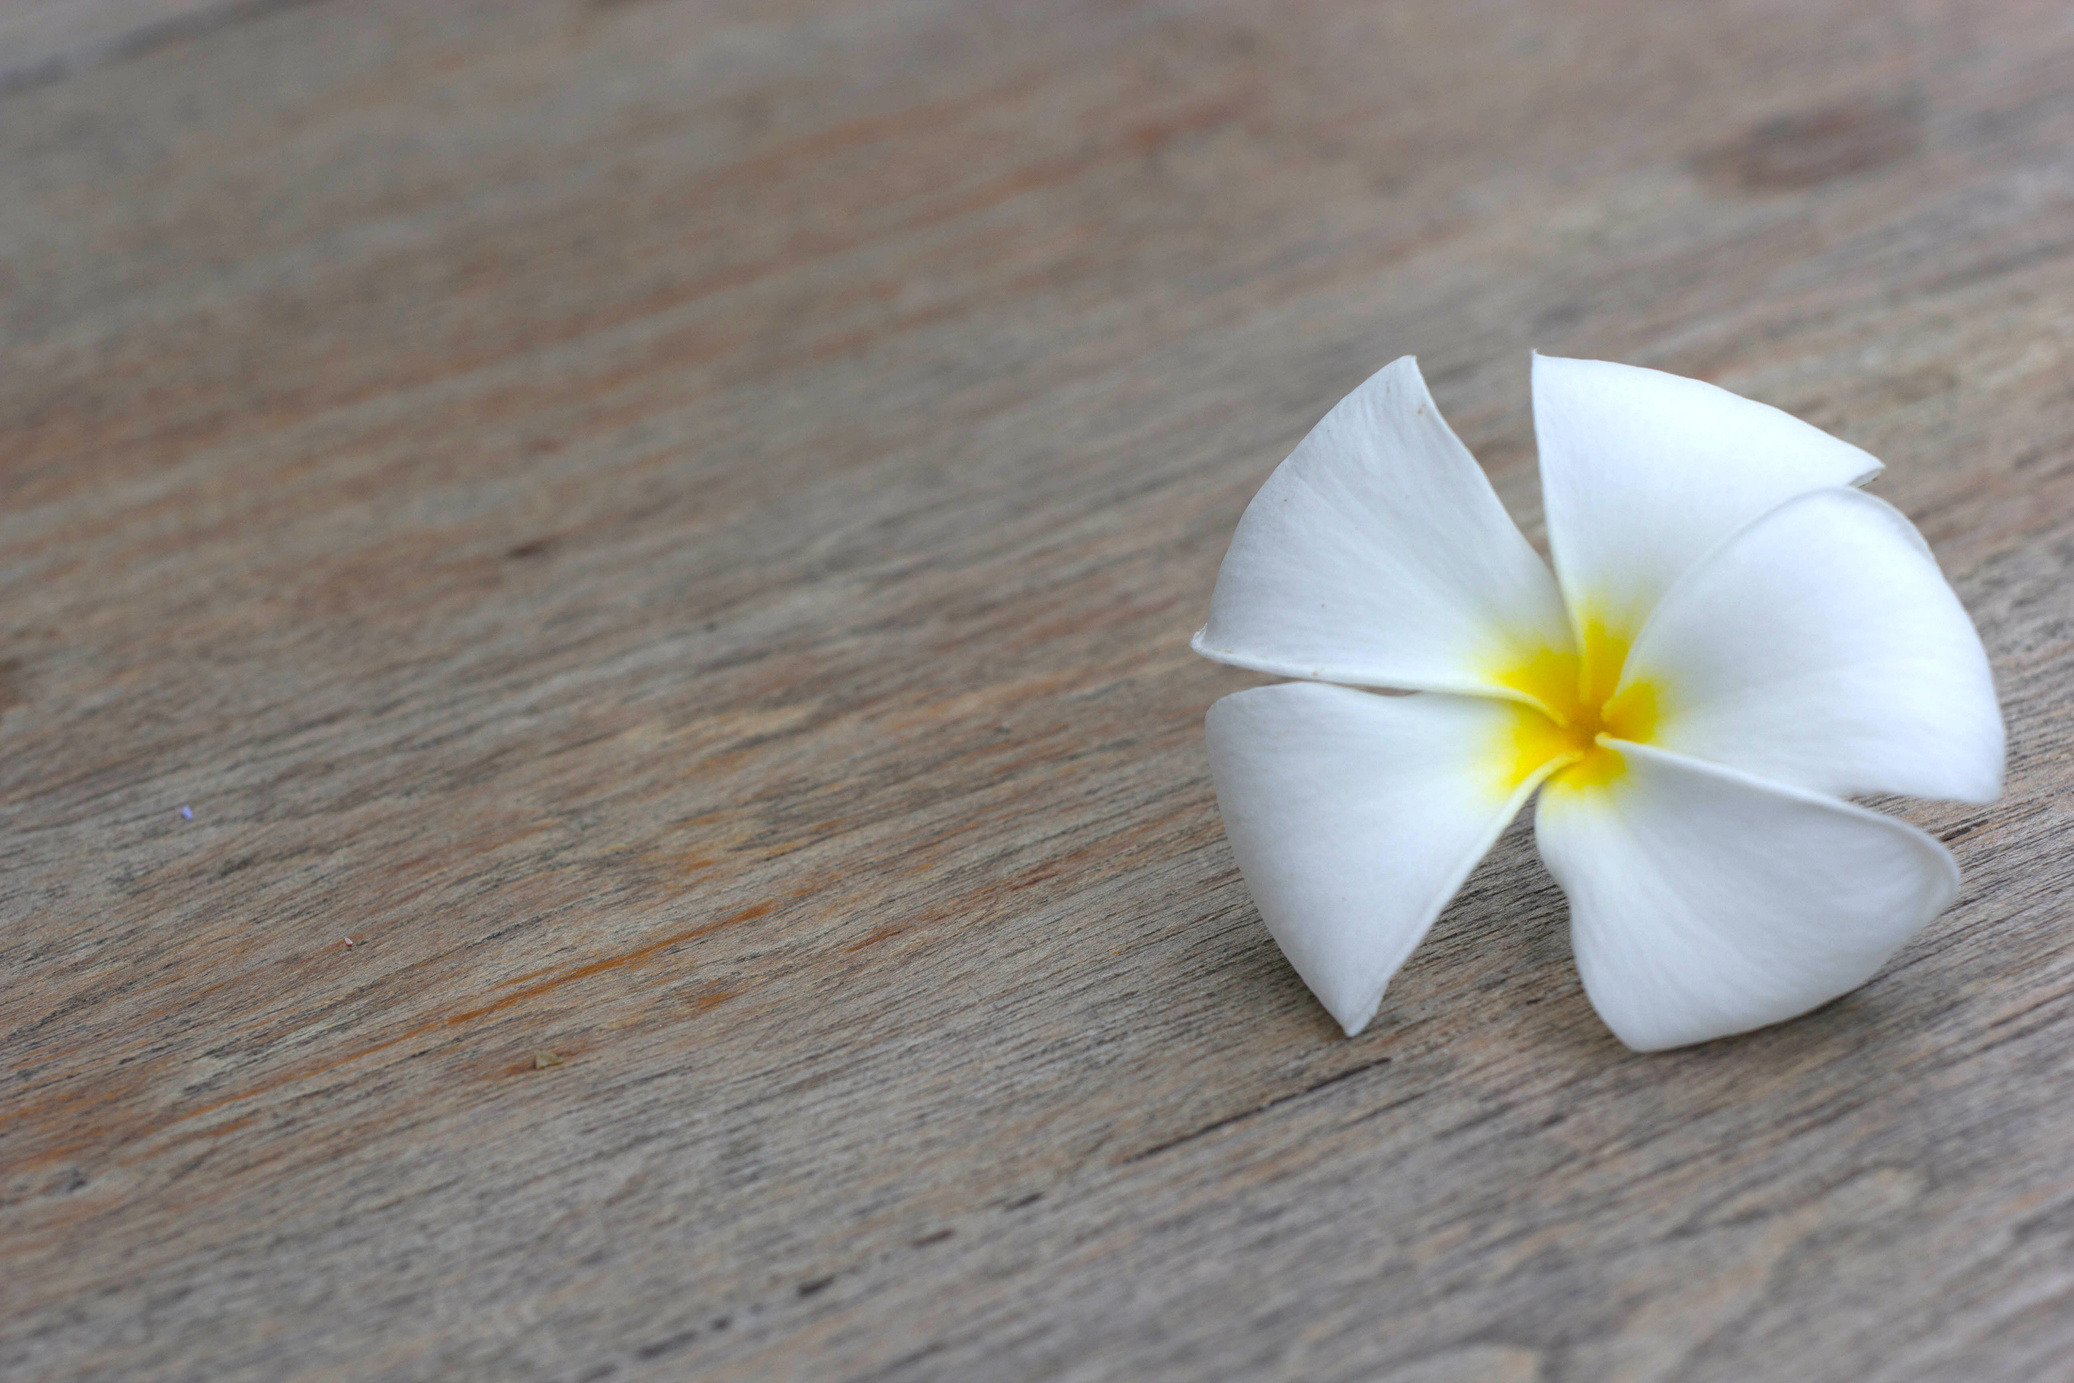 plumeria flower on the table